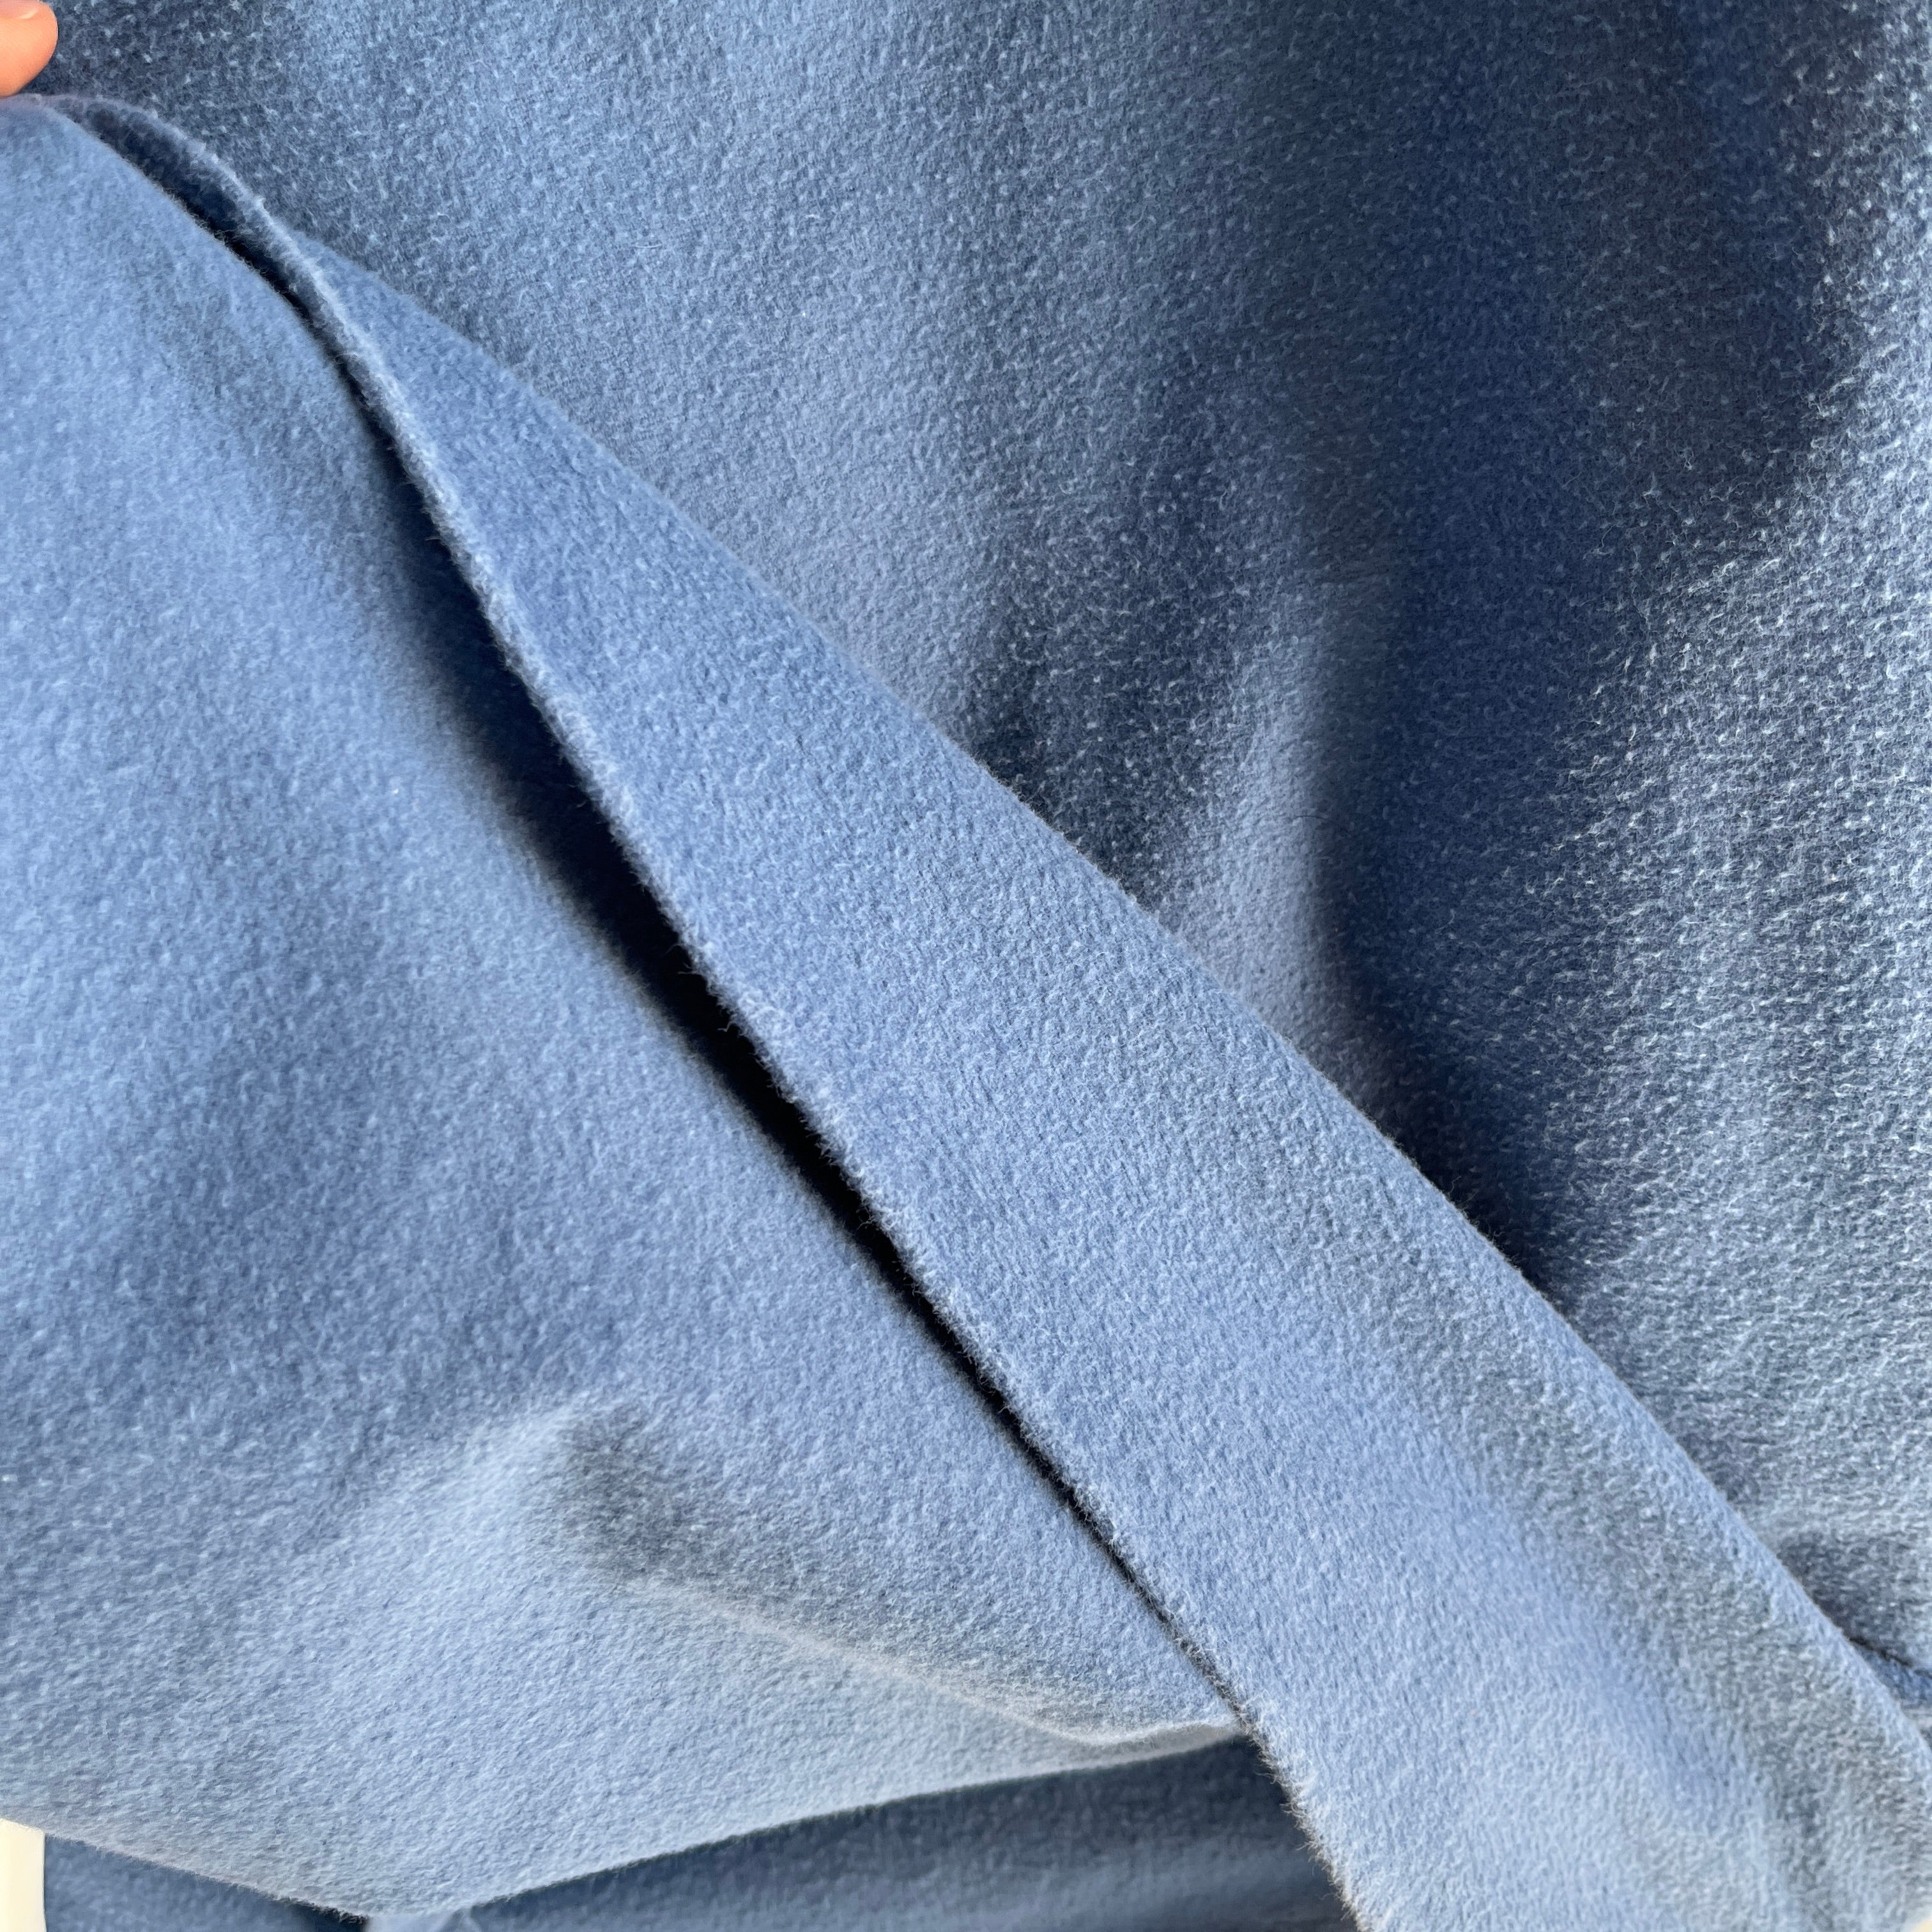 1990/2000s USA Made Slate Blue L.L. Bean Chamois Flannel Shirt